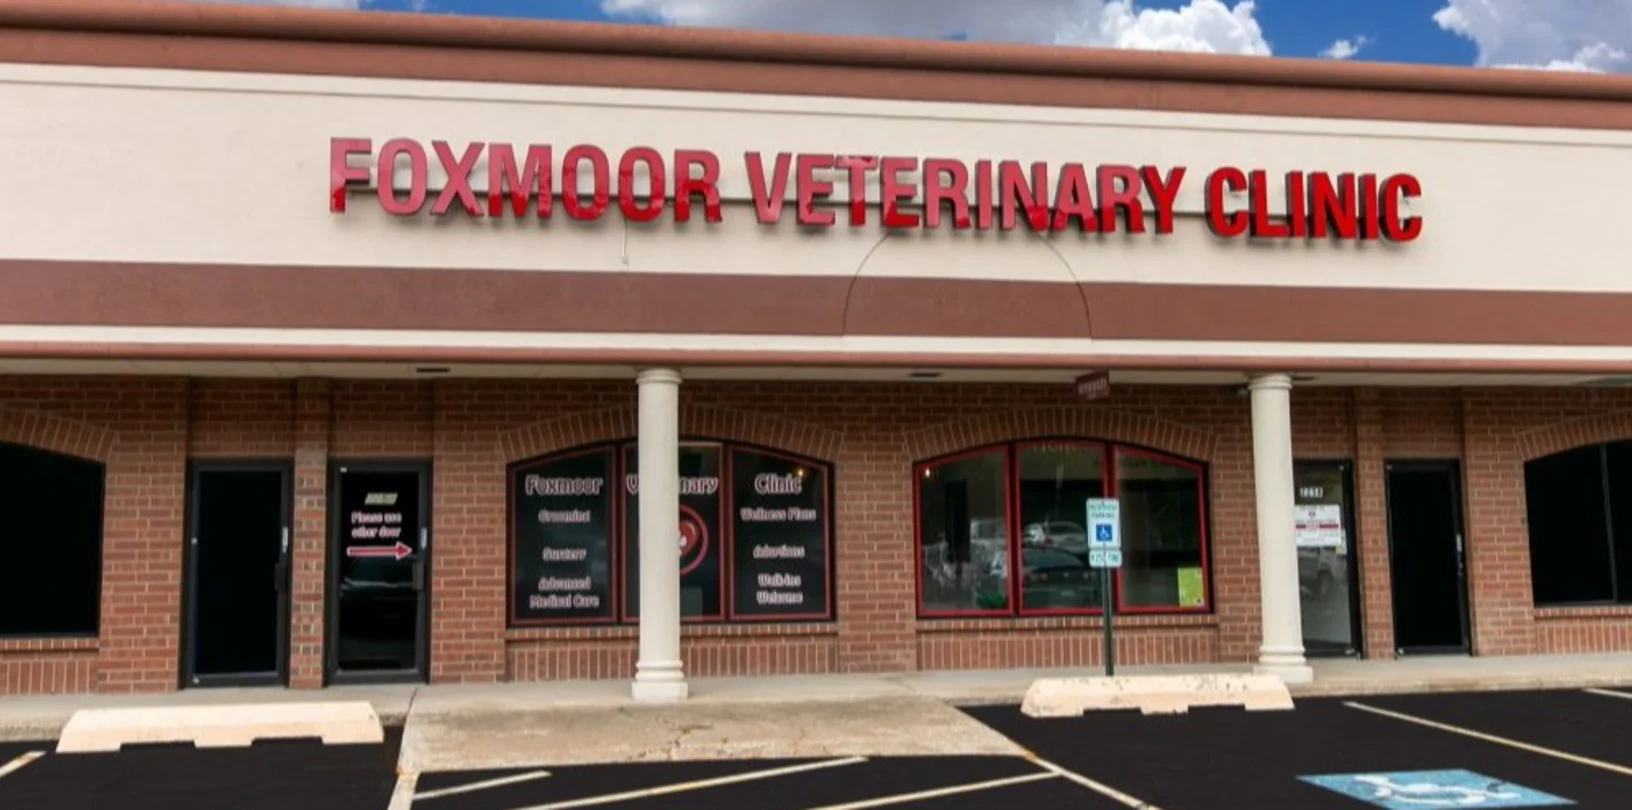 Foxmoor Veterinary Clinic Building Exterior 